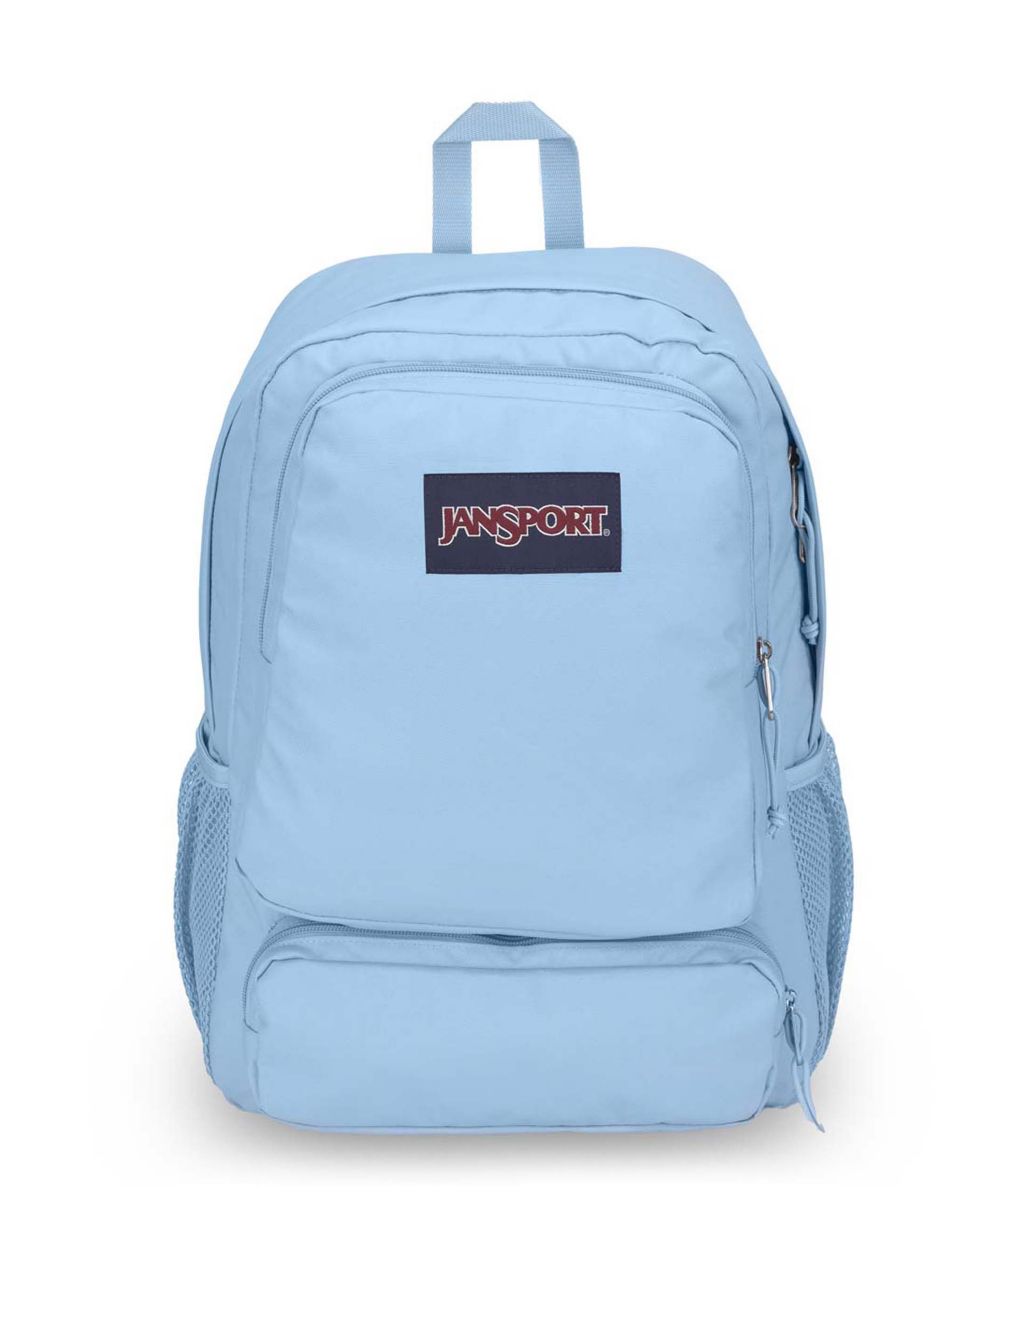 Doubleton Multi Pocket Backpack image 1